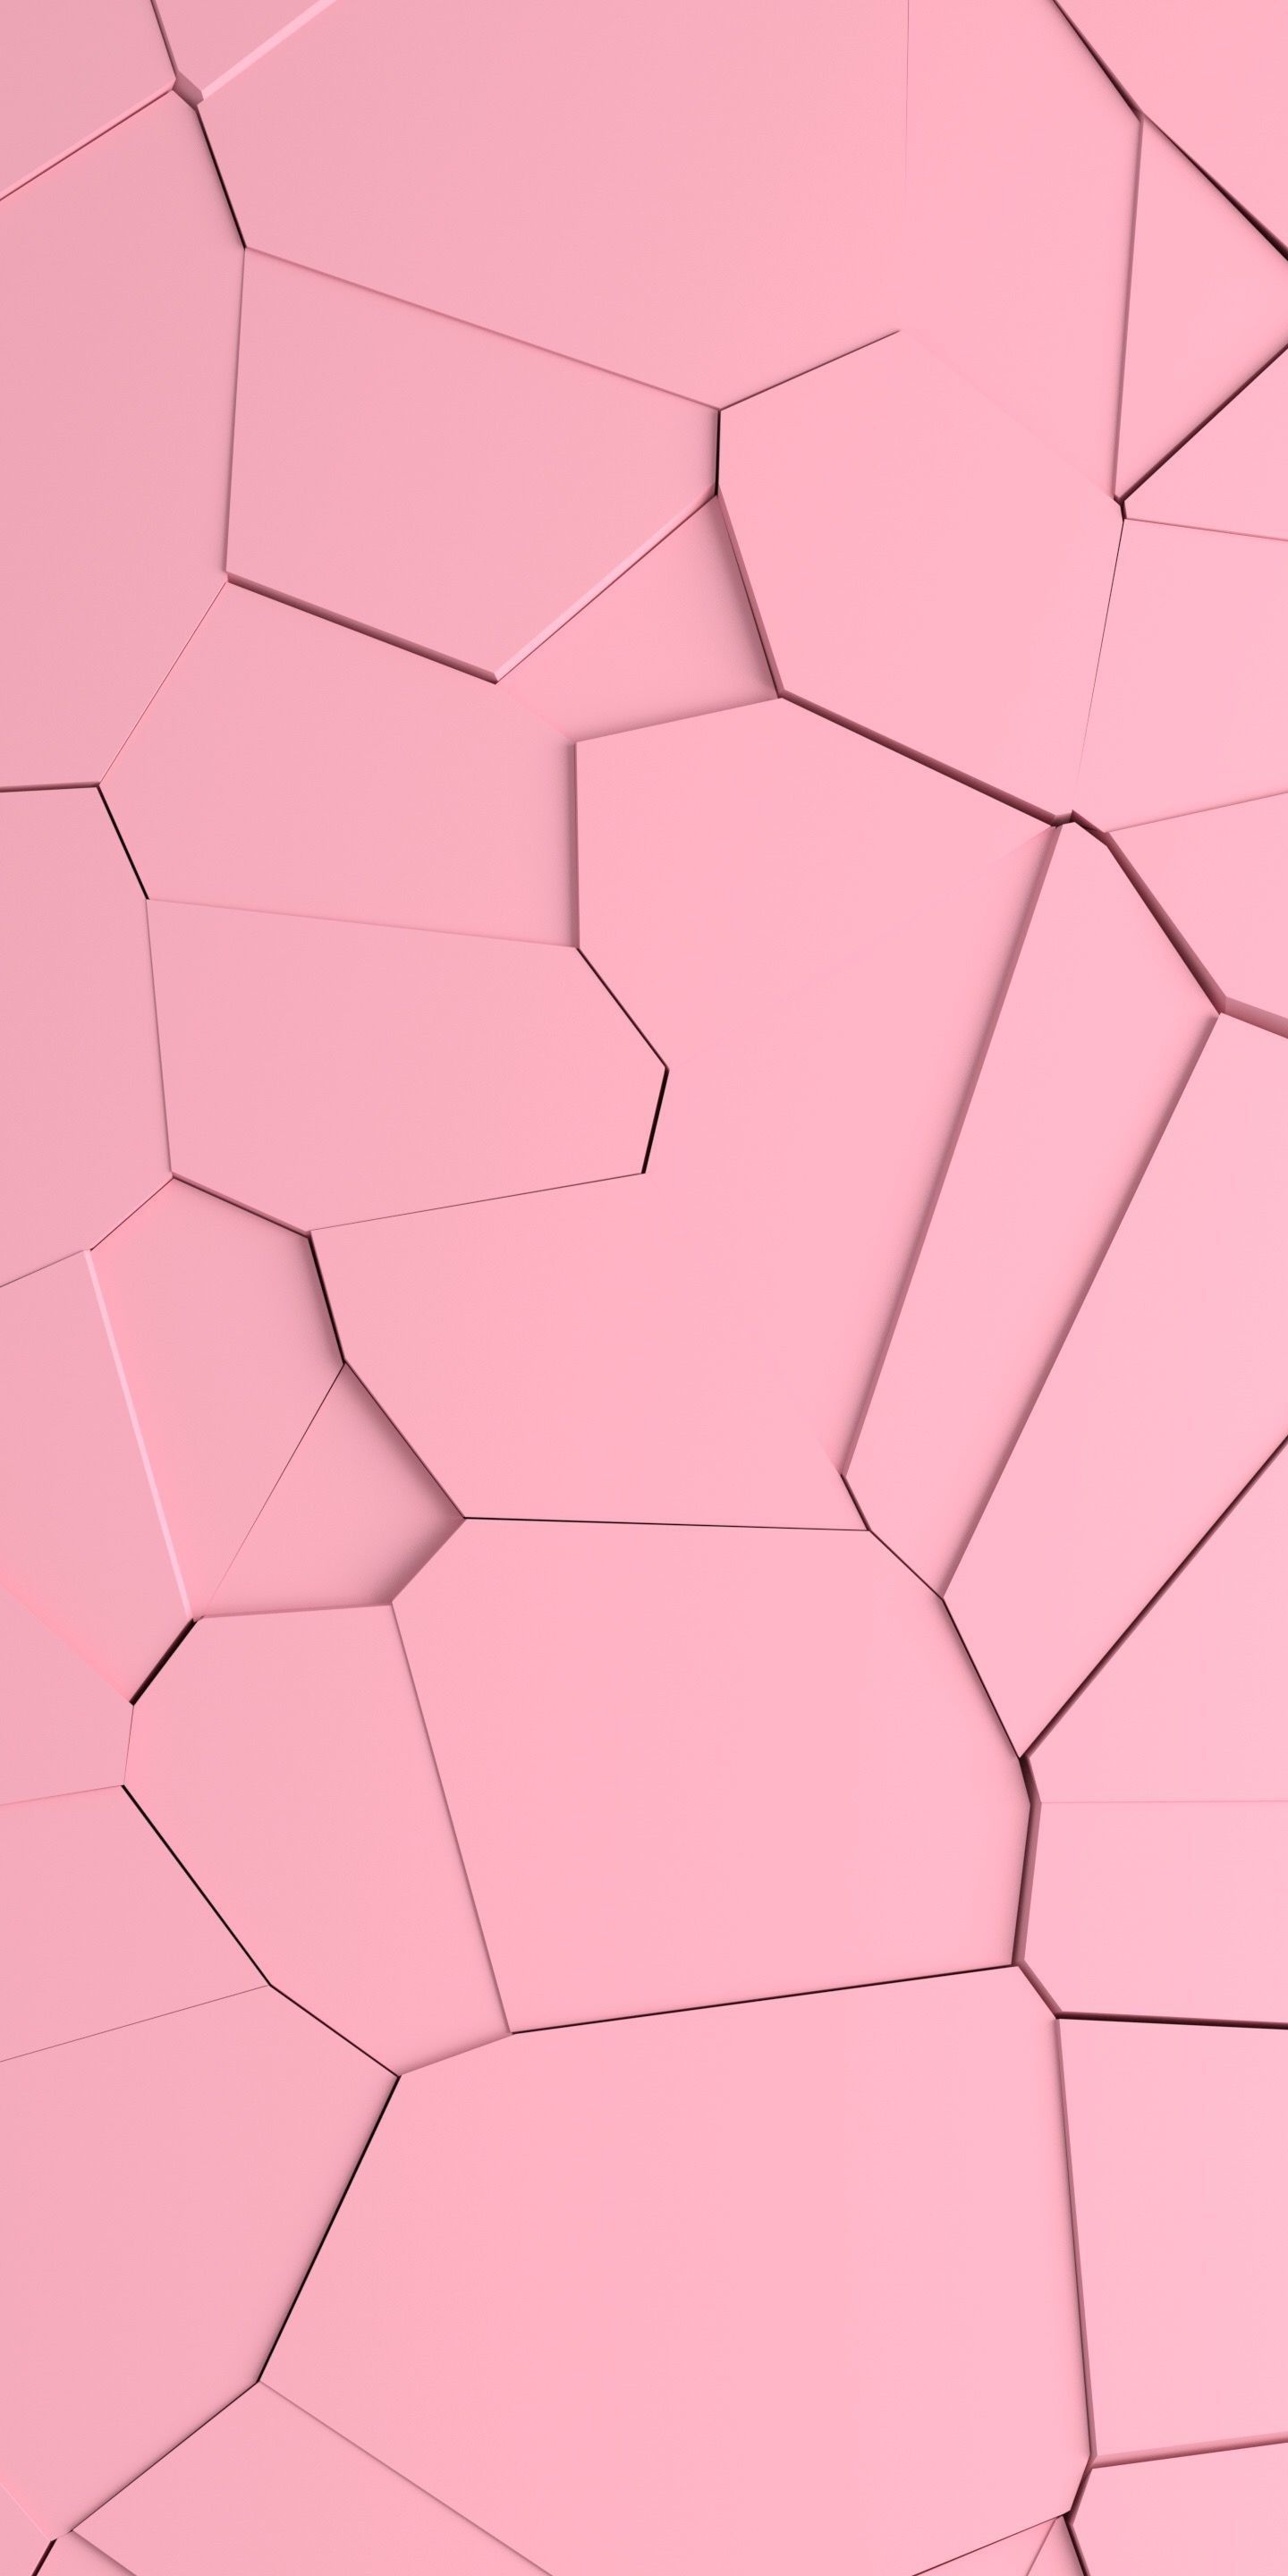 Cute Pink Wallpaper for iPhone. Pink wallpaper iphone, Pink wallpaper, Abstract iphone wallpaper